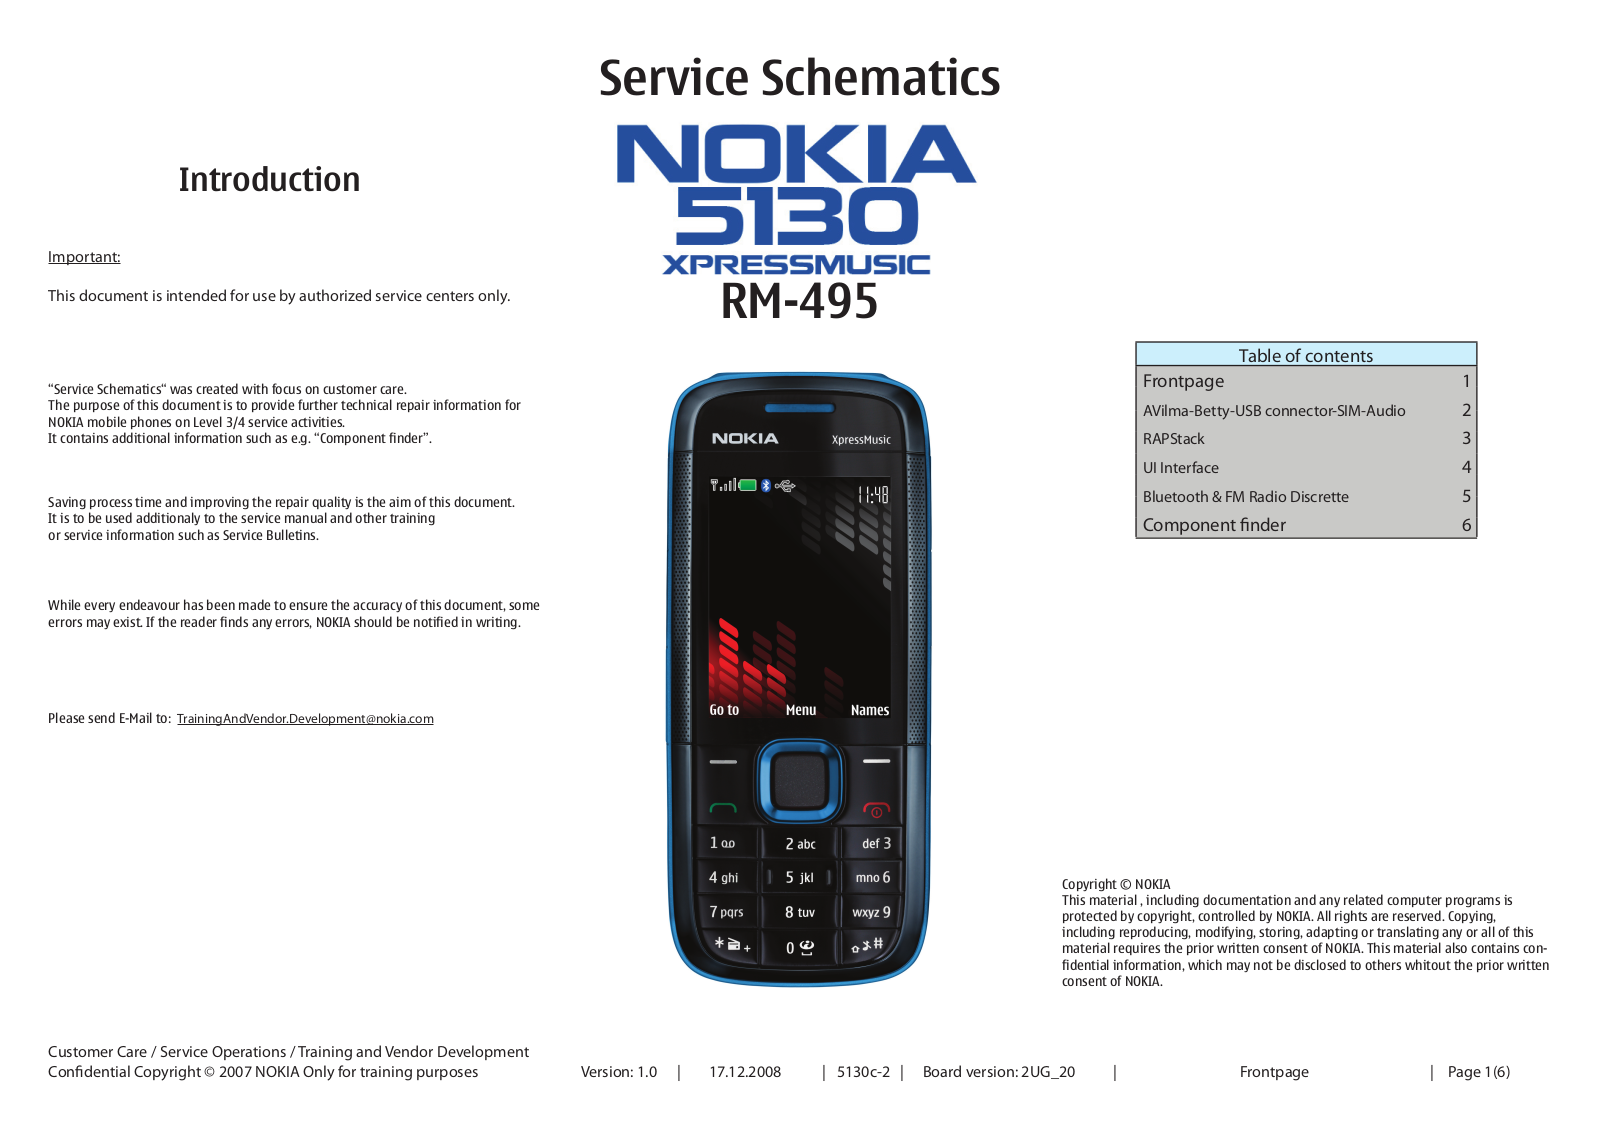 Nokia 5130 XpressMusic RM-495, 5130 XpressMusic  RM-496 Schematic